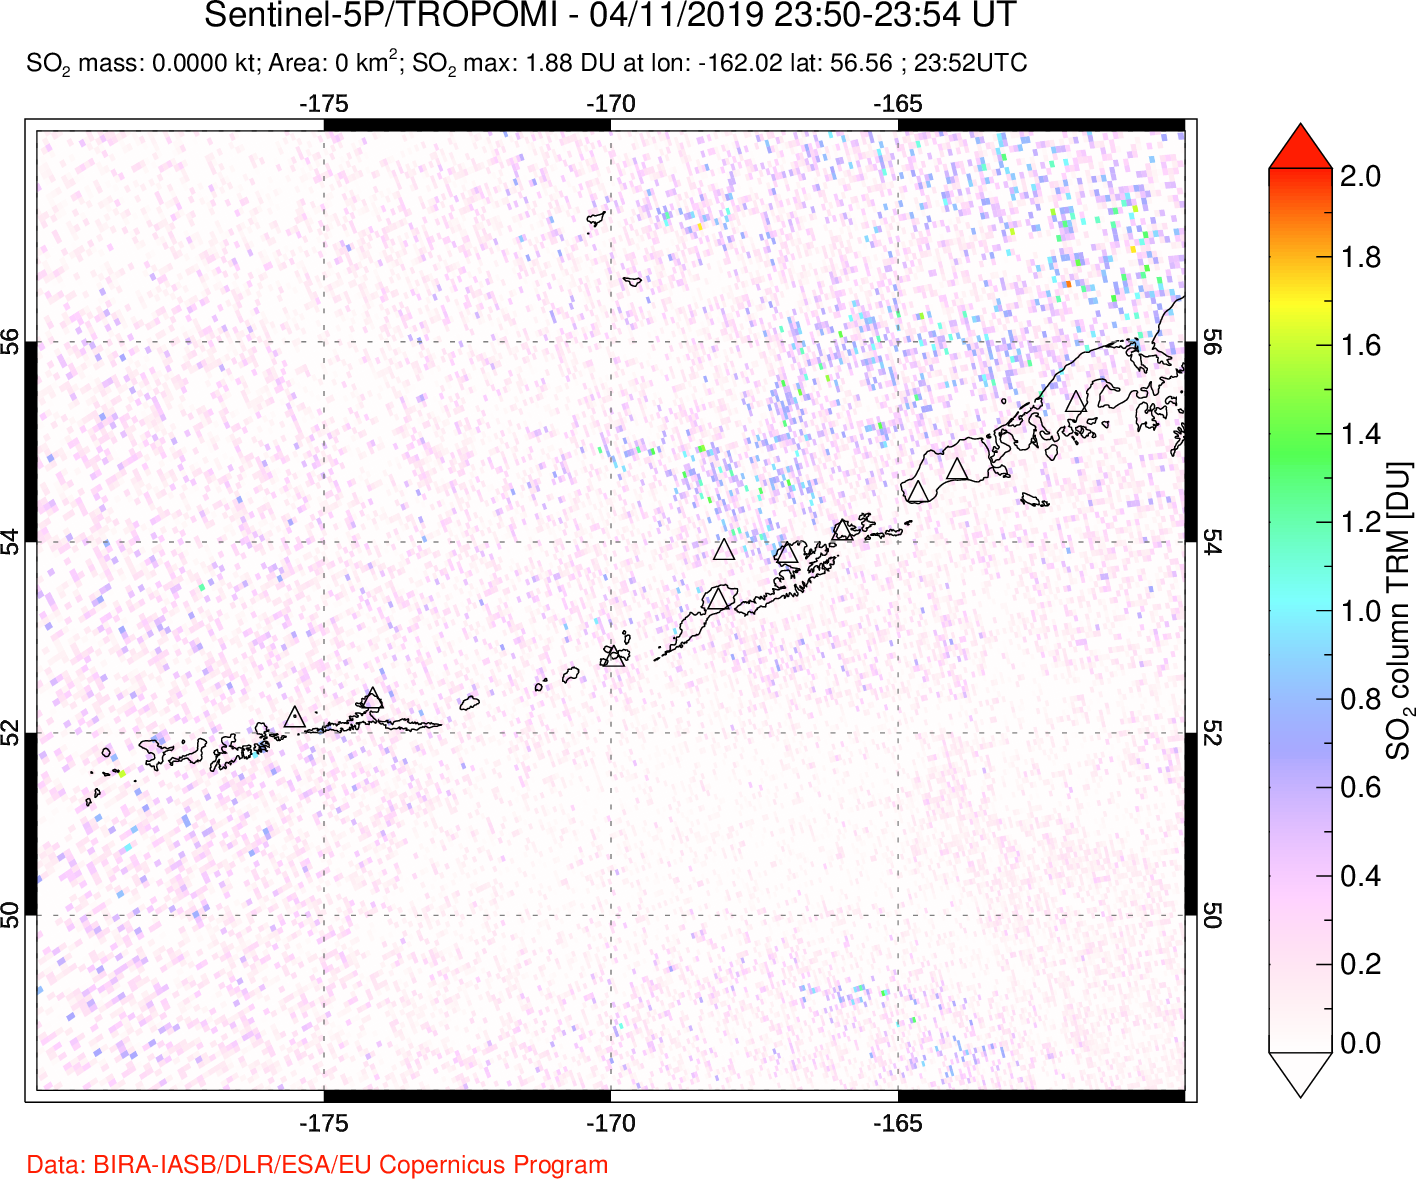 A sulfur dioxide image over Aleutian Islands, Alaska, USA on Apr 11, 2019.